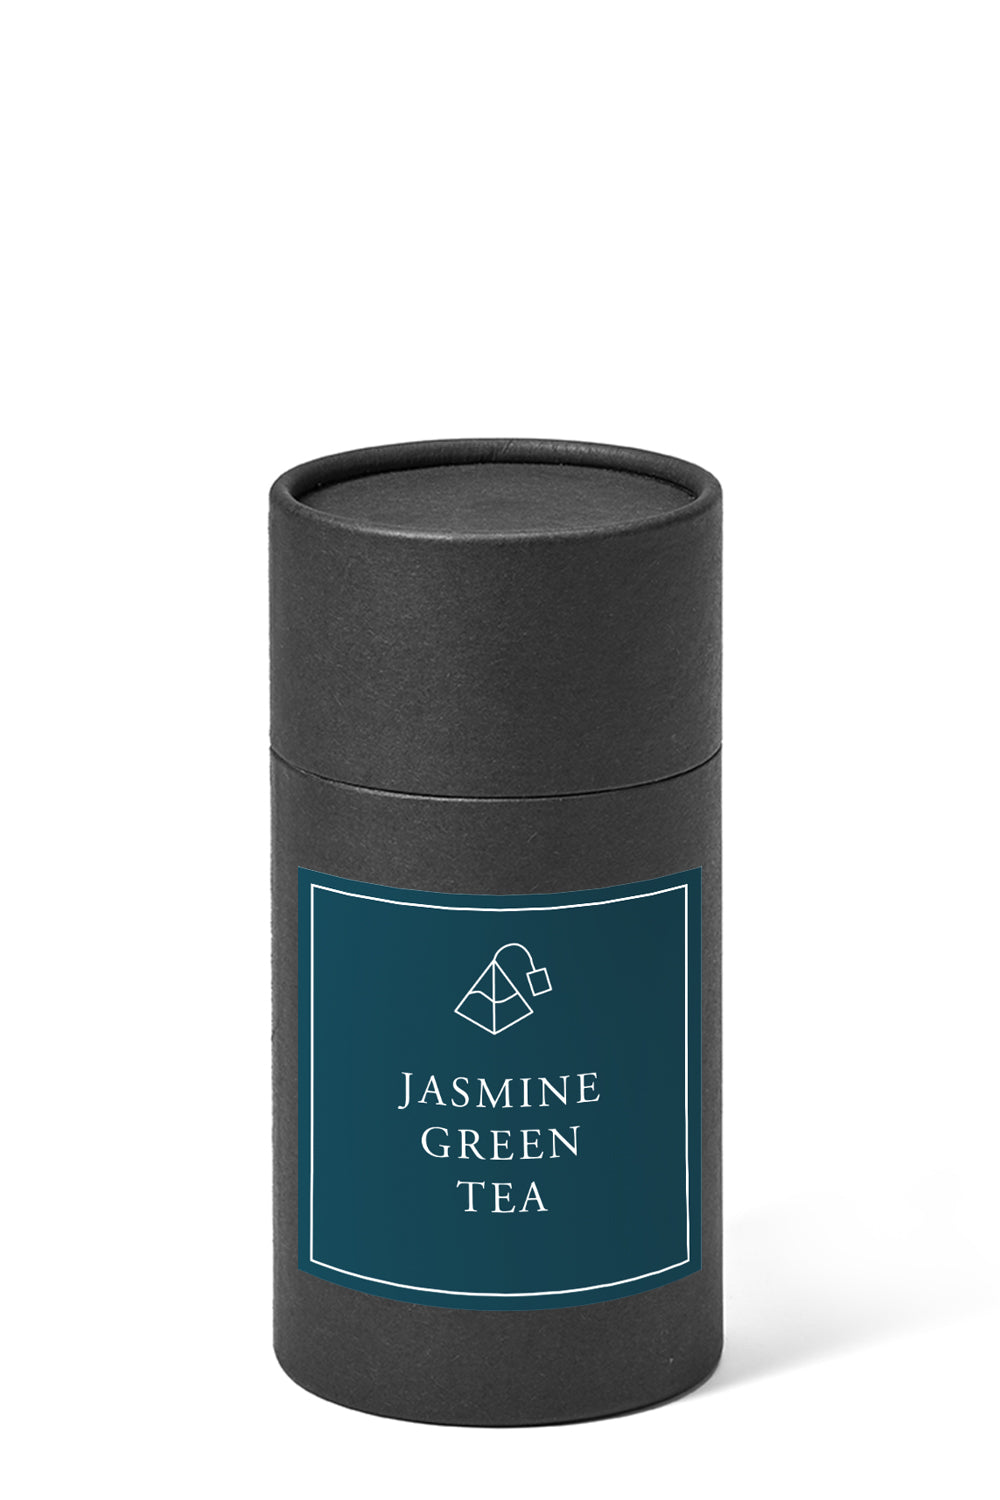 Jasmine Green Tea (Pyramid Bags)-15 pyramids gift-Loose Leaf Tea-High Teas